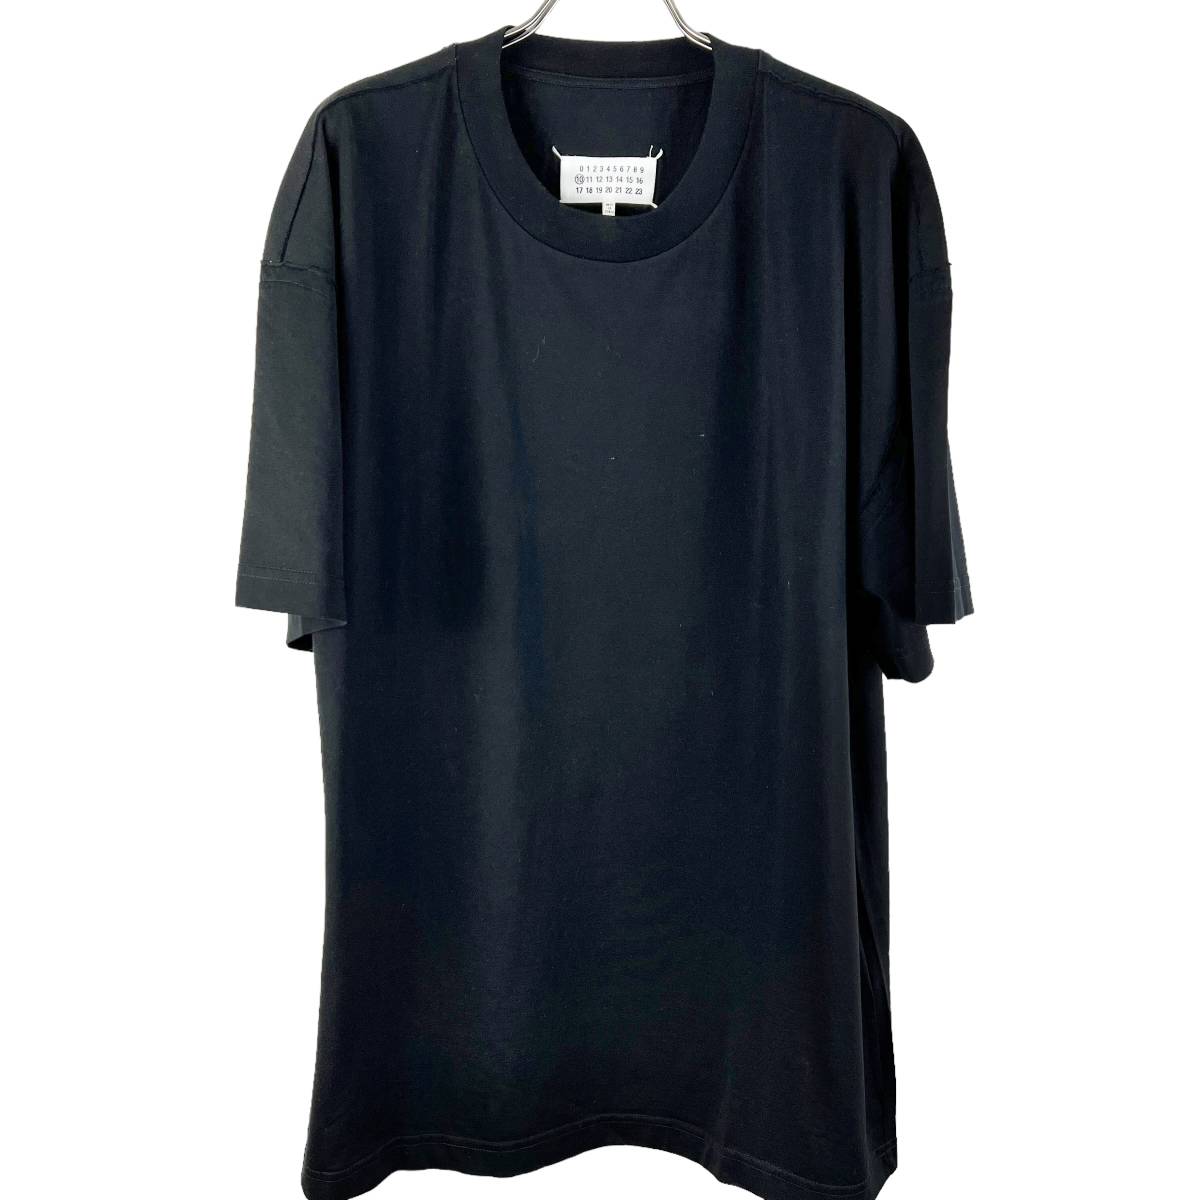 Maison Margiela (メゾン マルジェラ) Reconstructed Sleeve T Shirt (black)